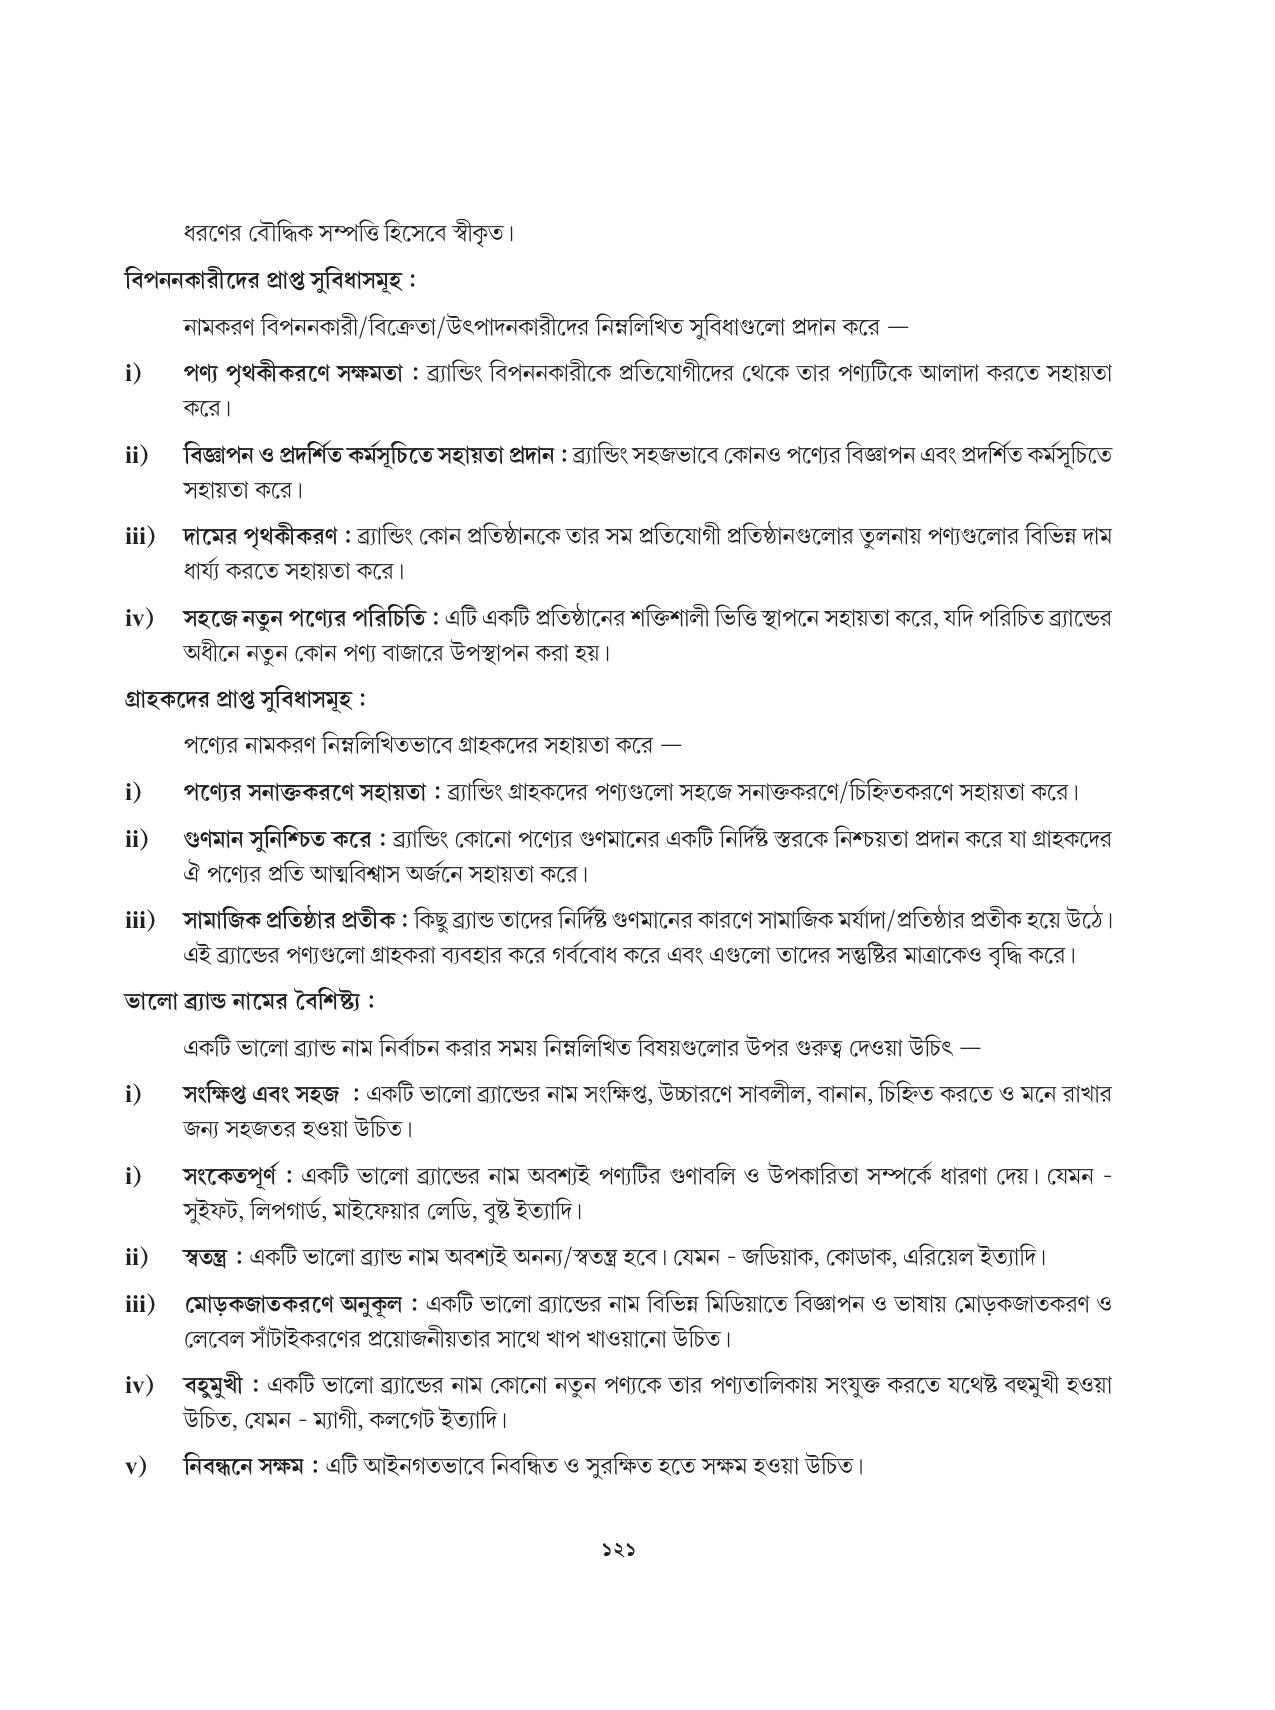 Tripura Board Class 12 Karbari Shastra Bengali Version Workbooks - Page 121